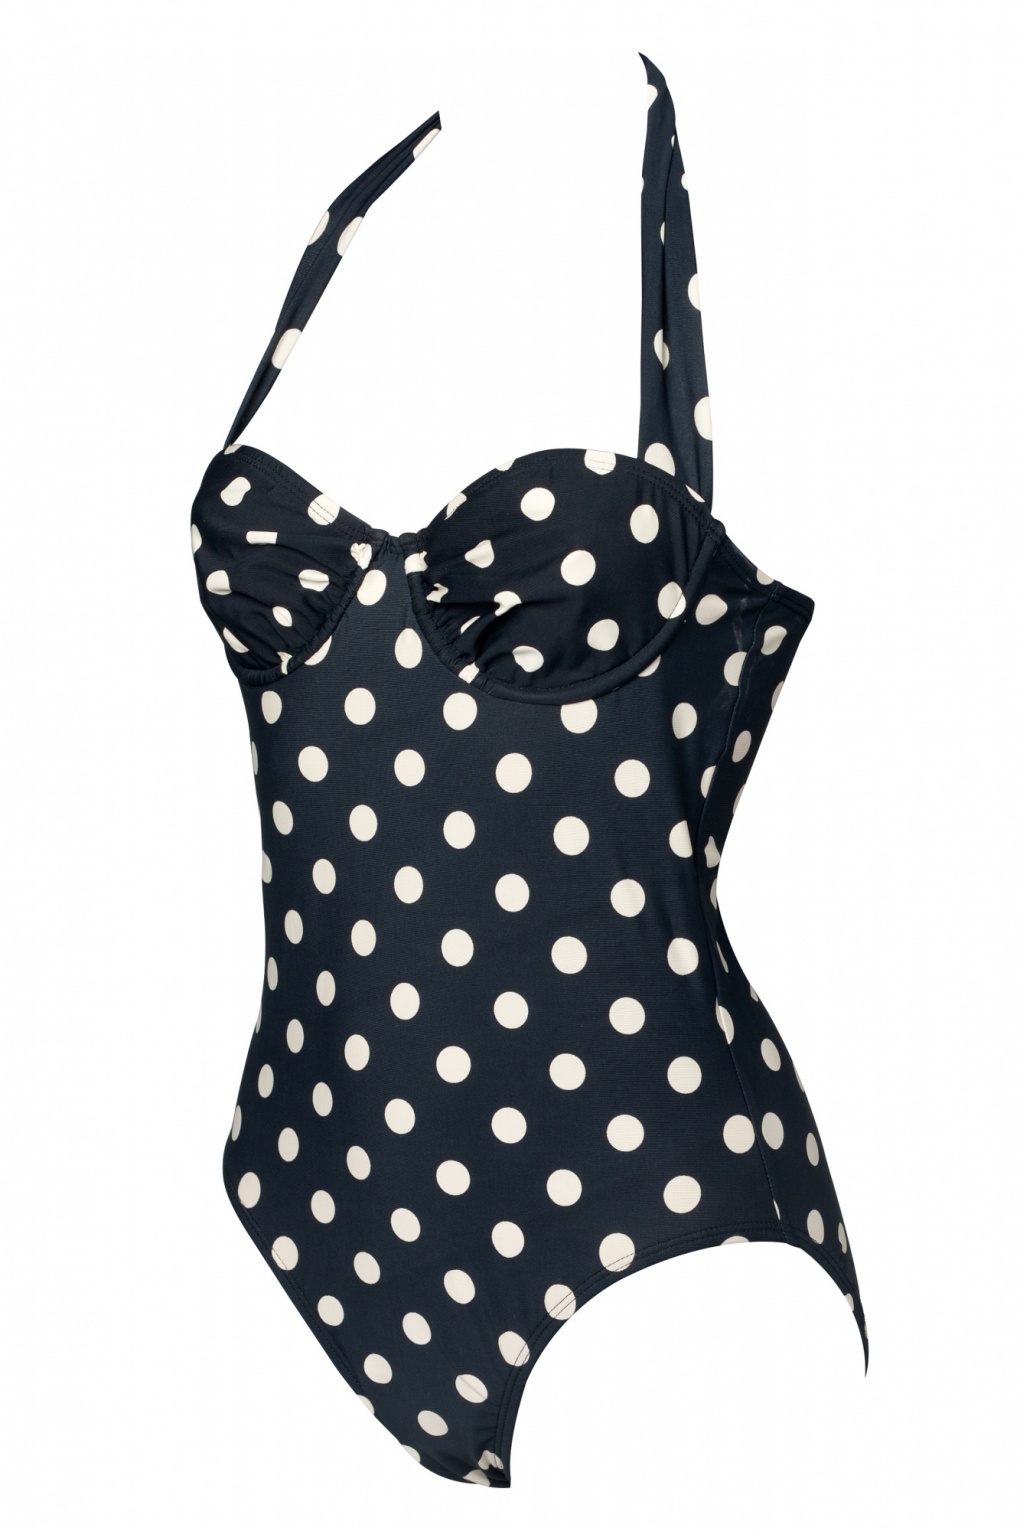 Spots Black White 1 piece halter swimsuit